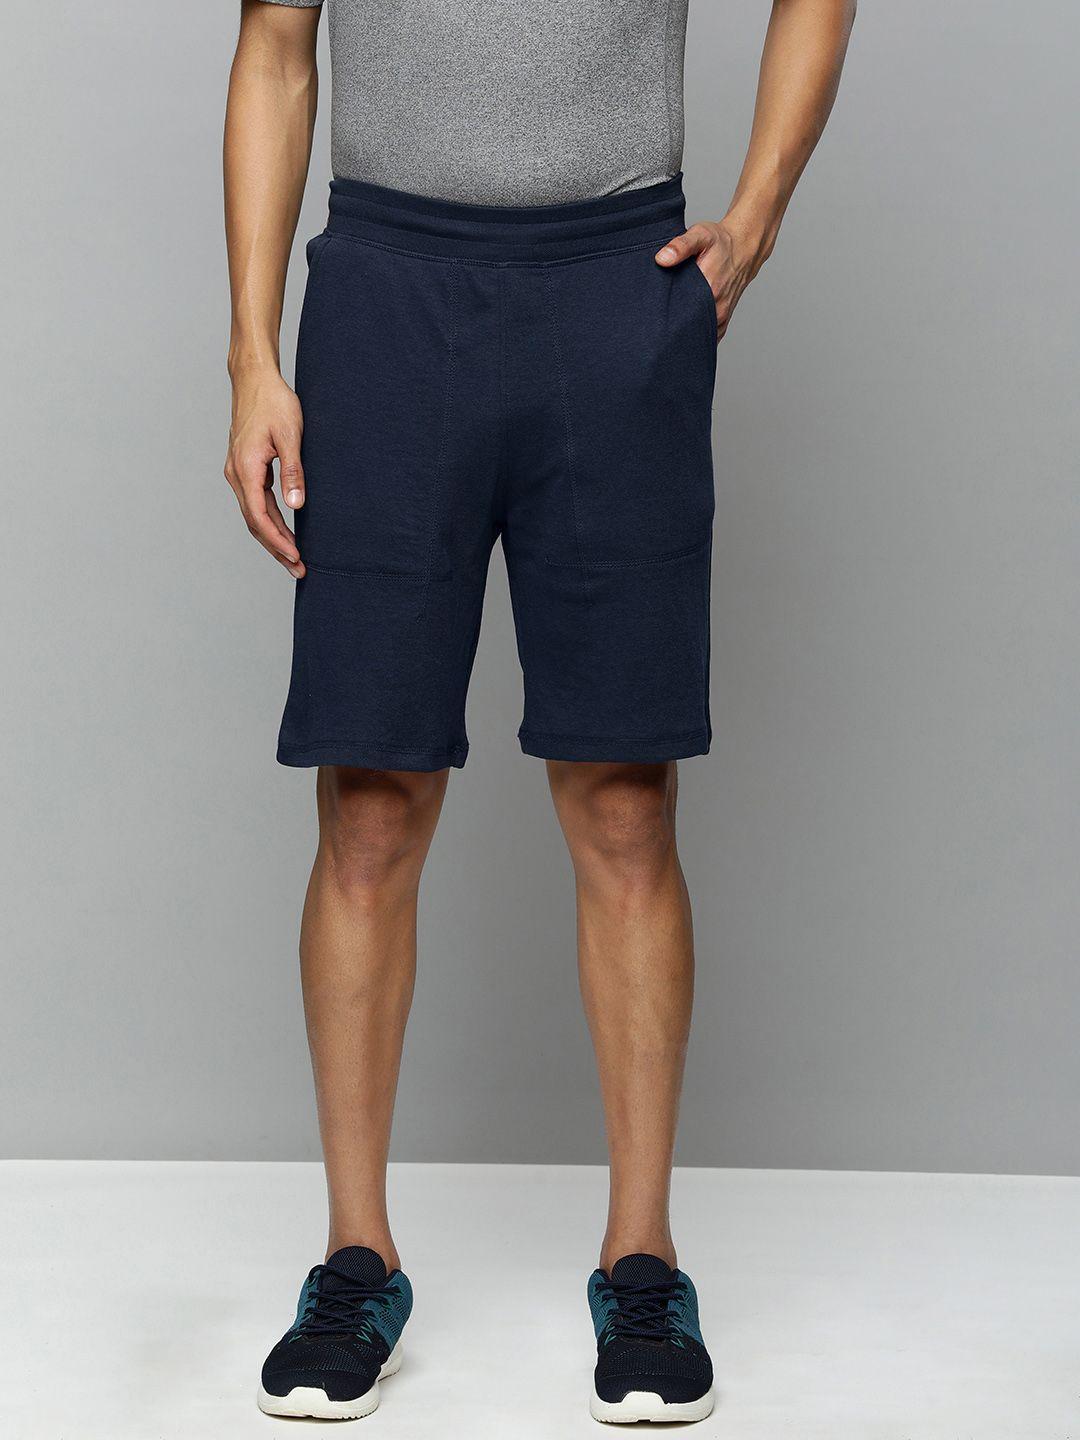 skechers men navy blue sports shorts with e-dry technology technology